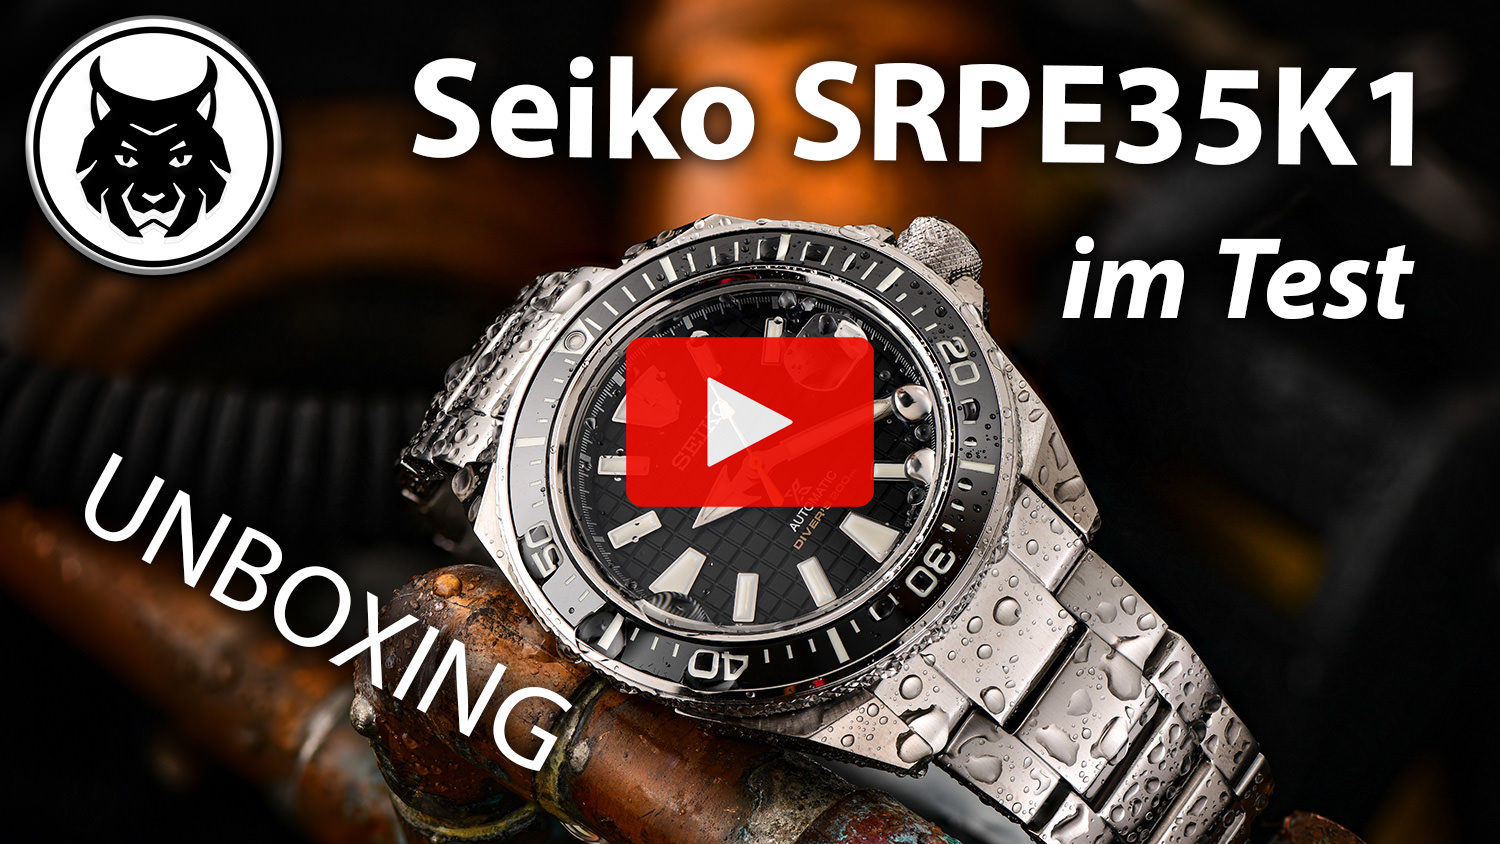 YouTube: Seiko Prospex King Samurai SRPE35K1 im Test - 4K